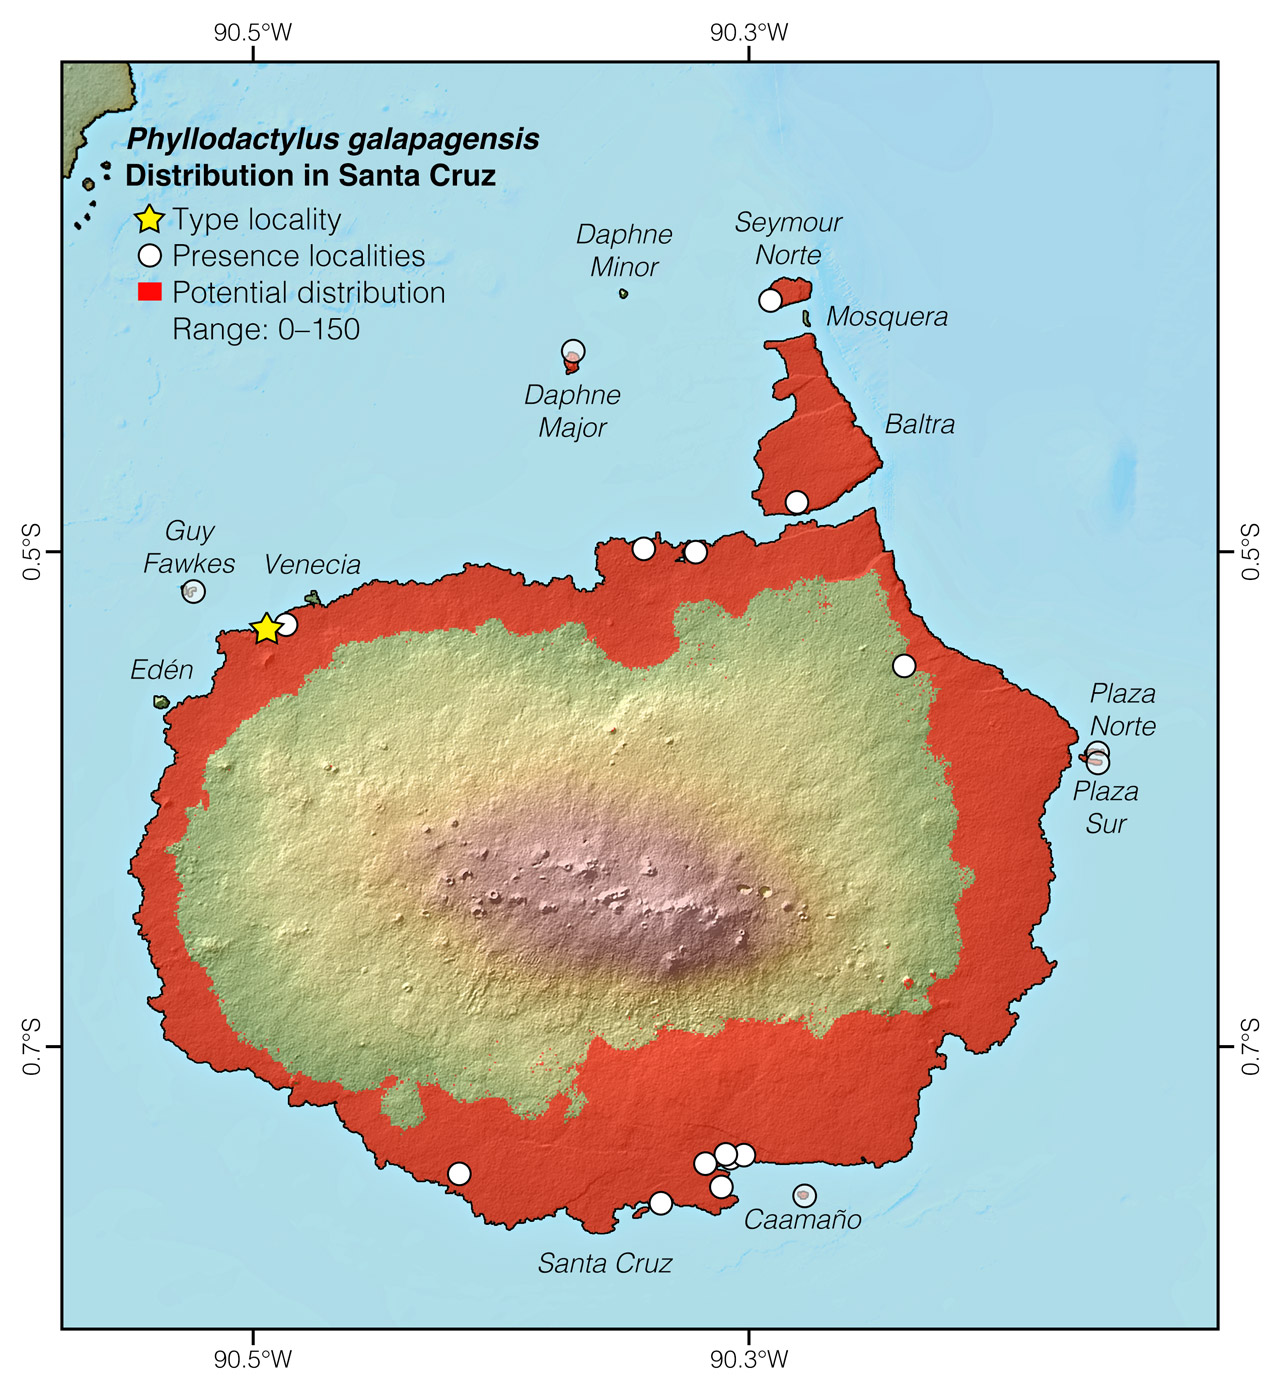 Distribution of Phyllodactylus galapagensis in San Cristóbal Island